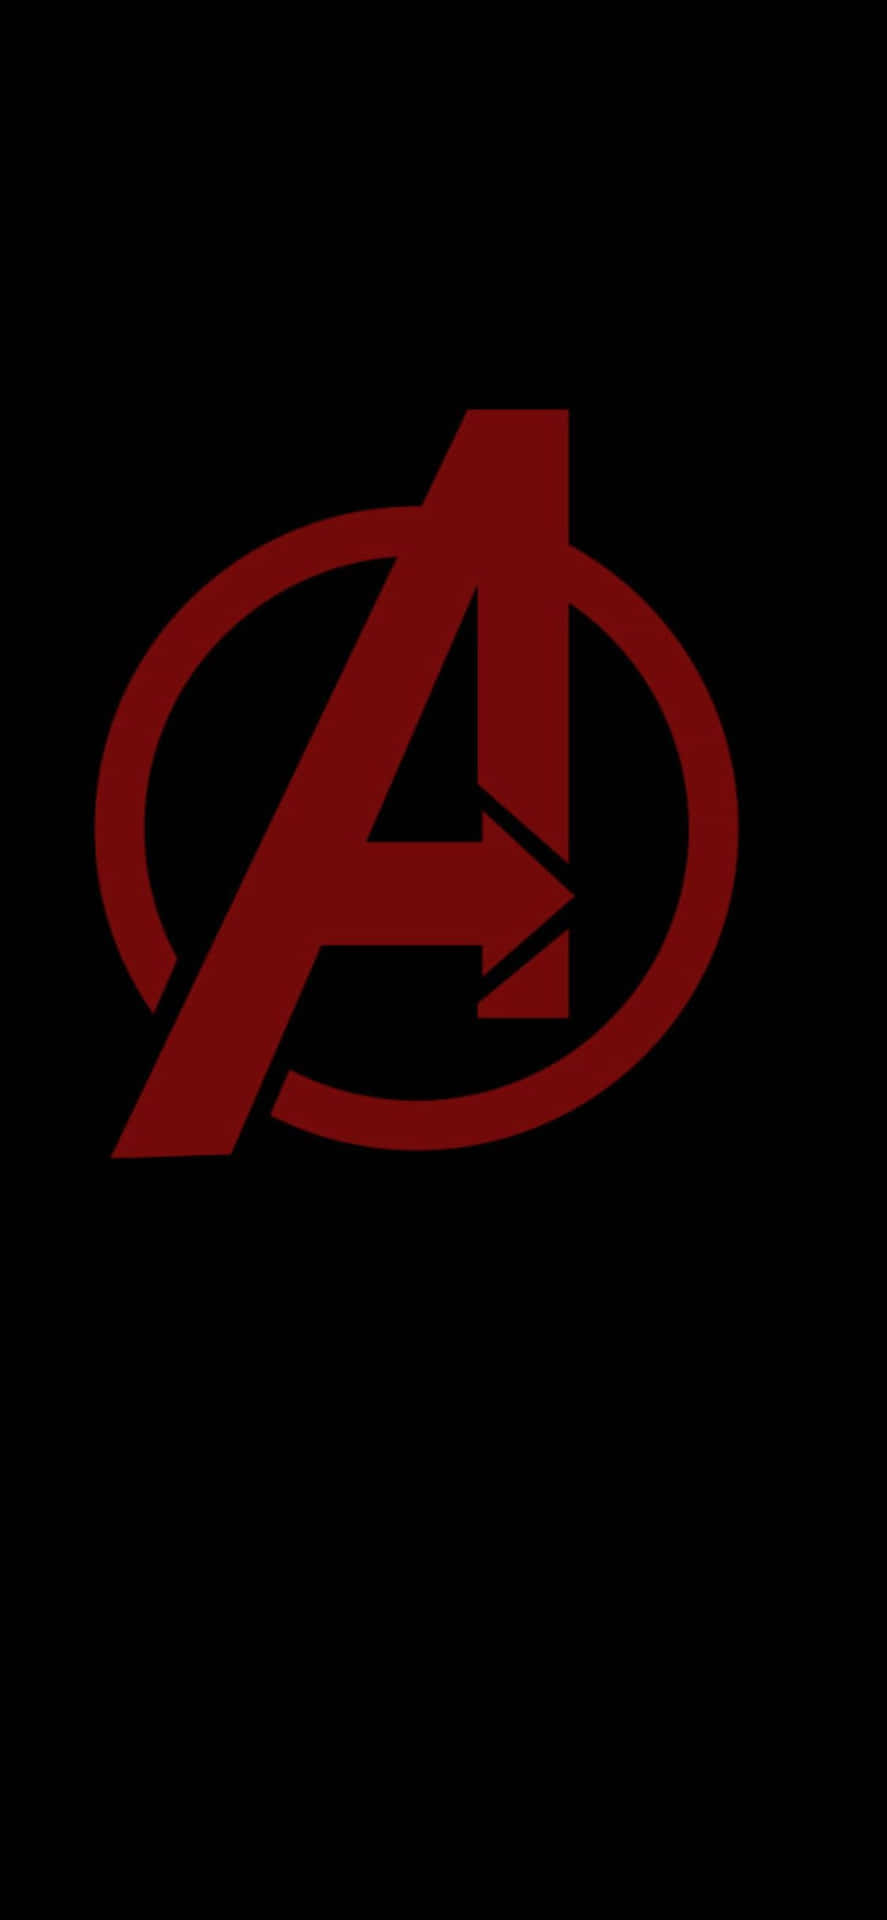 Fondode Pantalla Oscuro Minimalista Del Logo De Avengers Para Iphone Xs